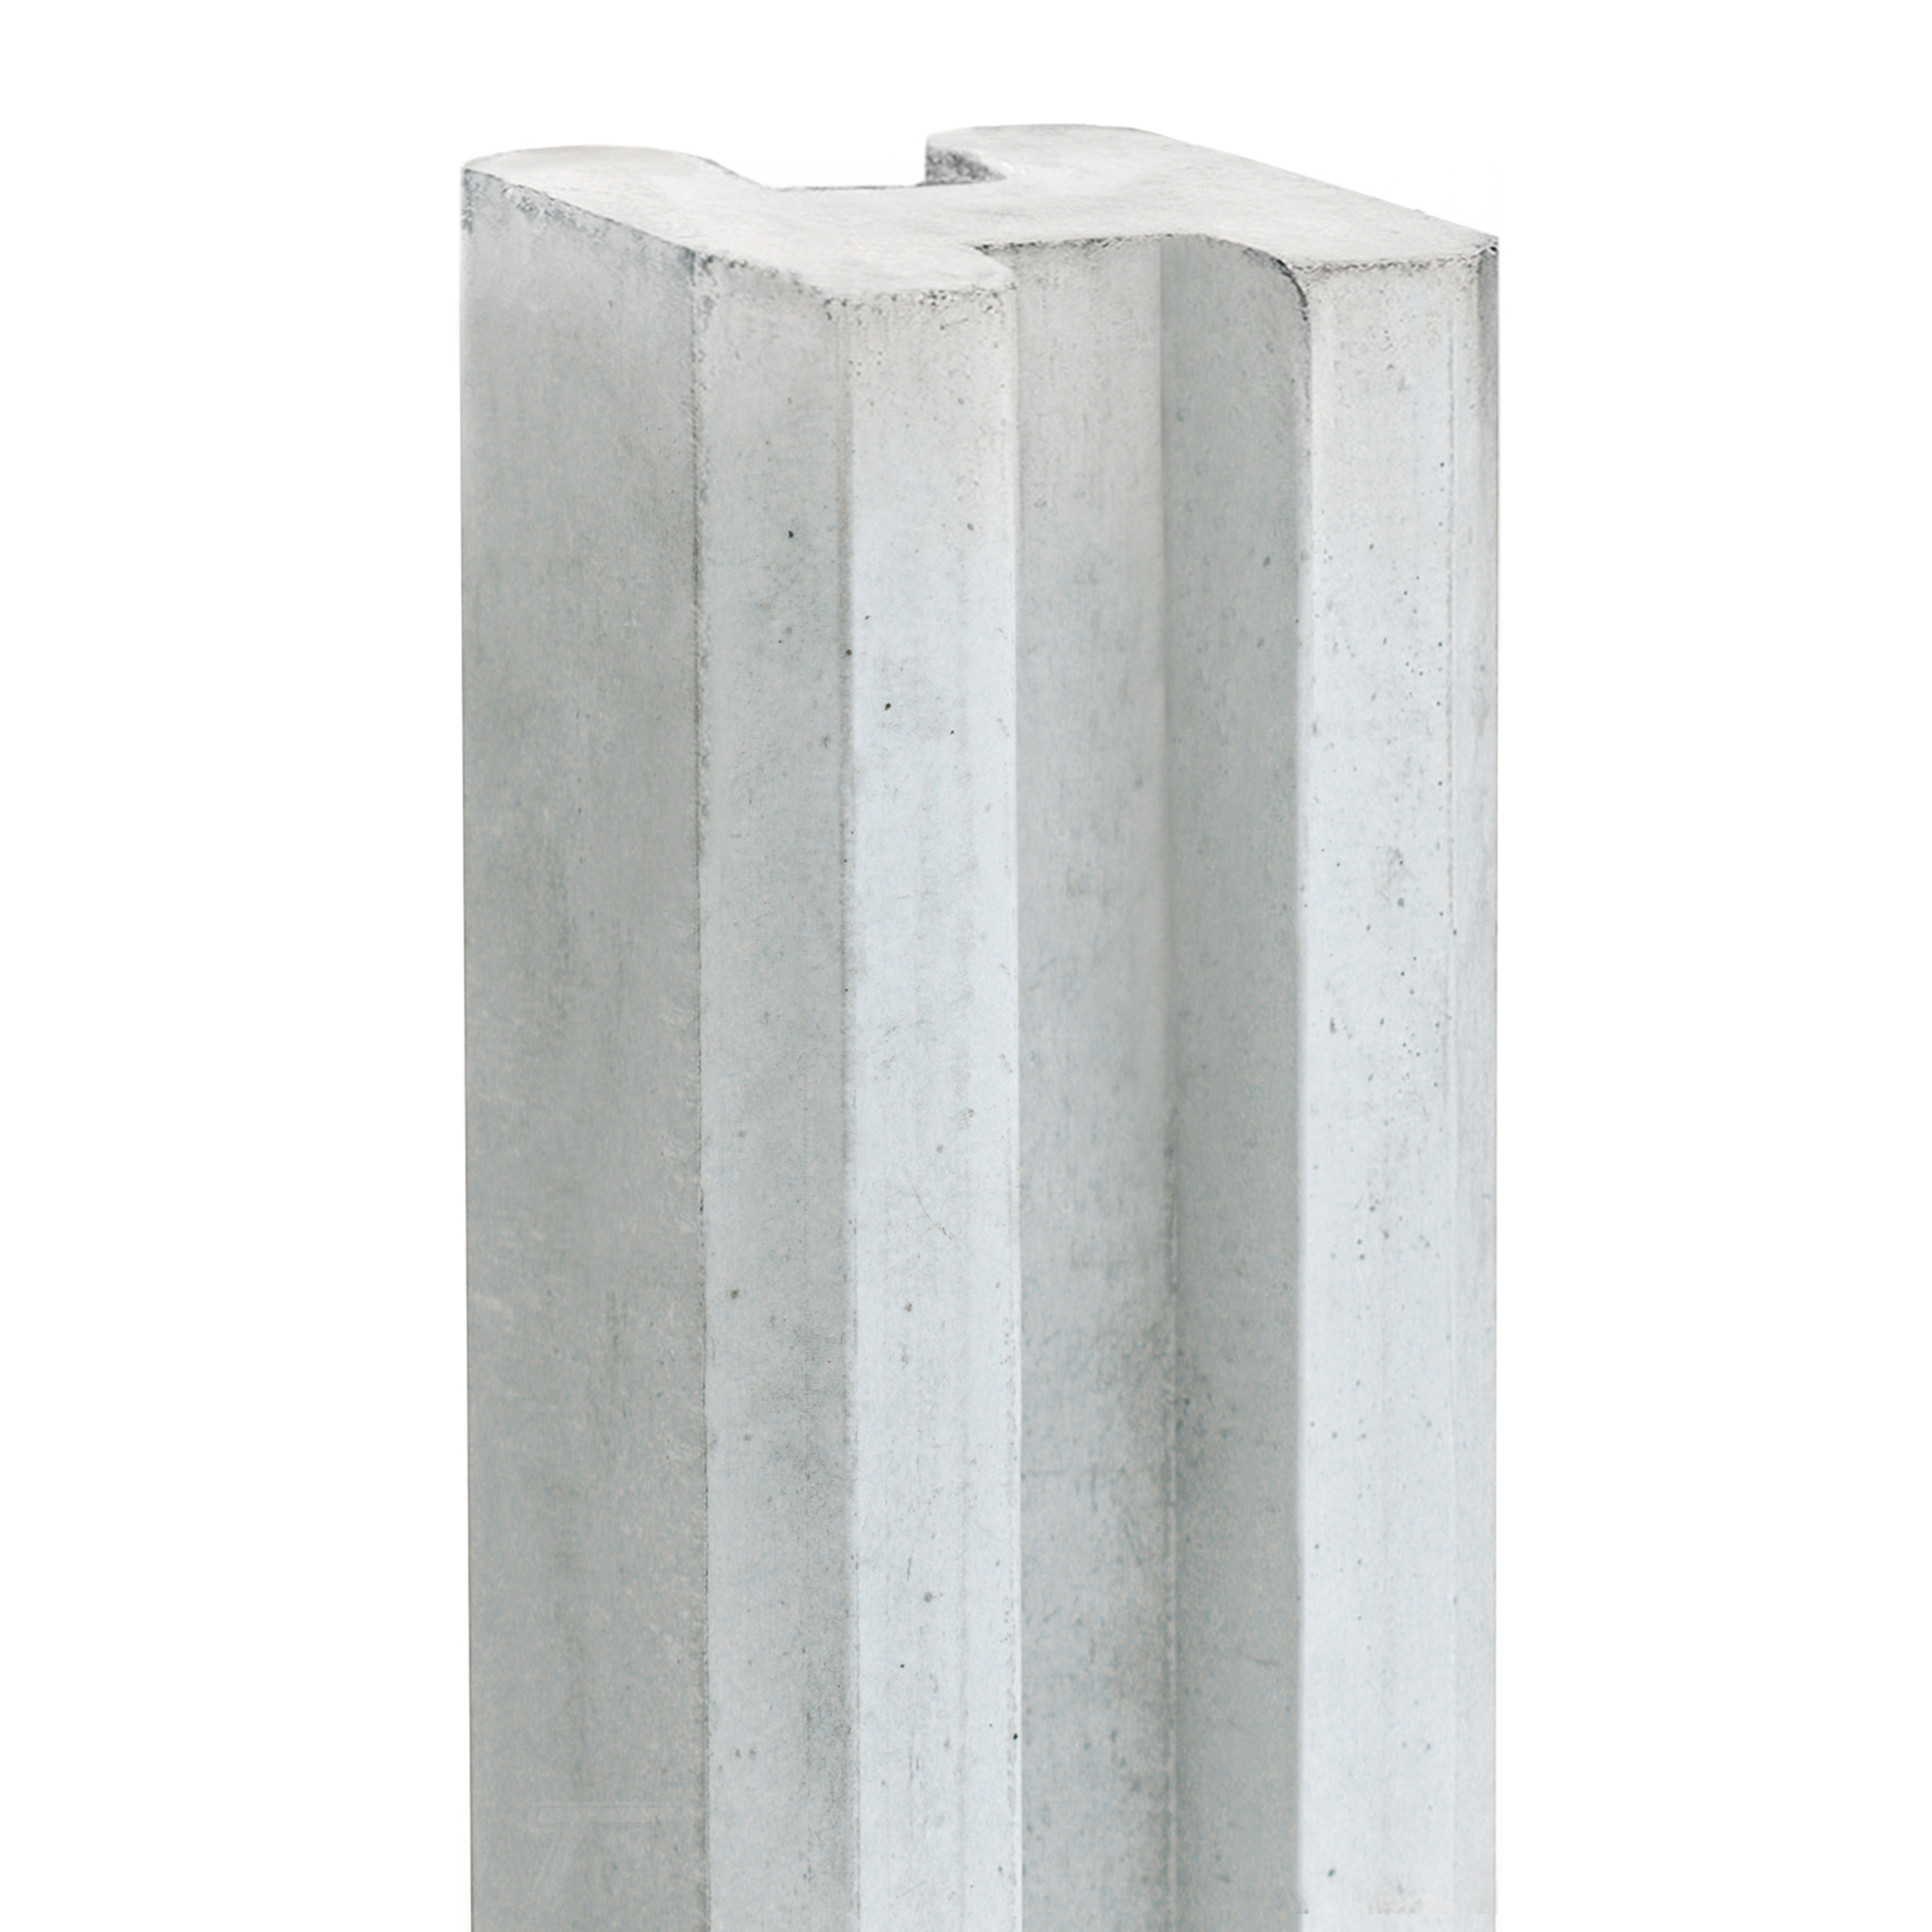 Berton©-sleufpaal Zaan wit/grijs vlakke kop 115 x 115 x 275 cm hoekmodel met brede ondersleuf